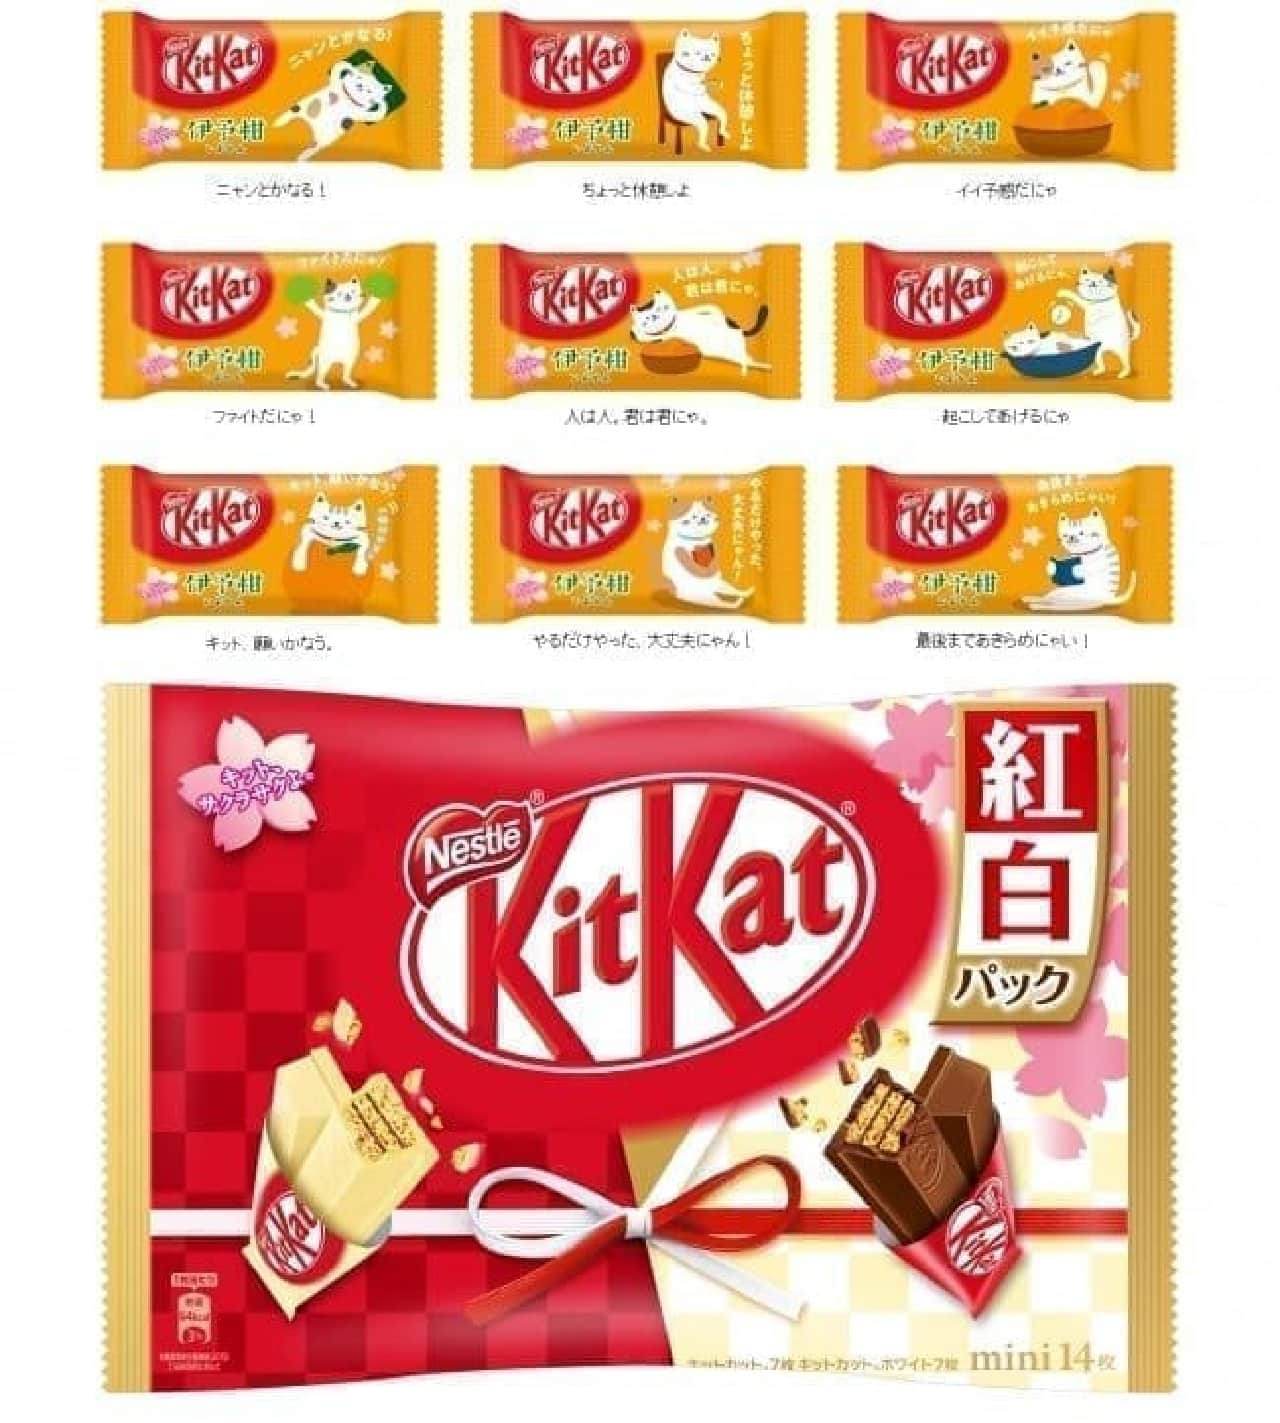 "KitKat Mini Red and White Pack" "KitKat Mini Iyokan"